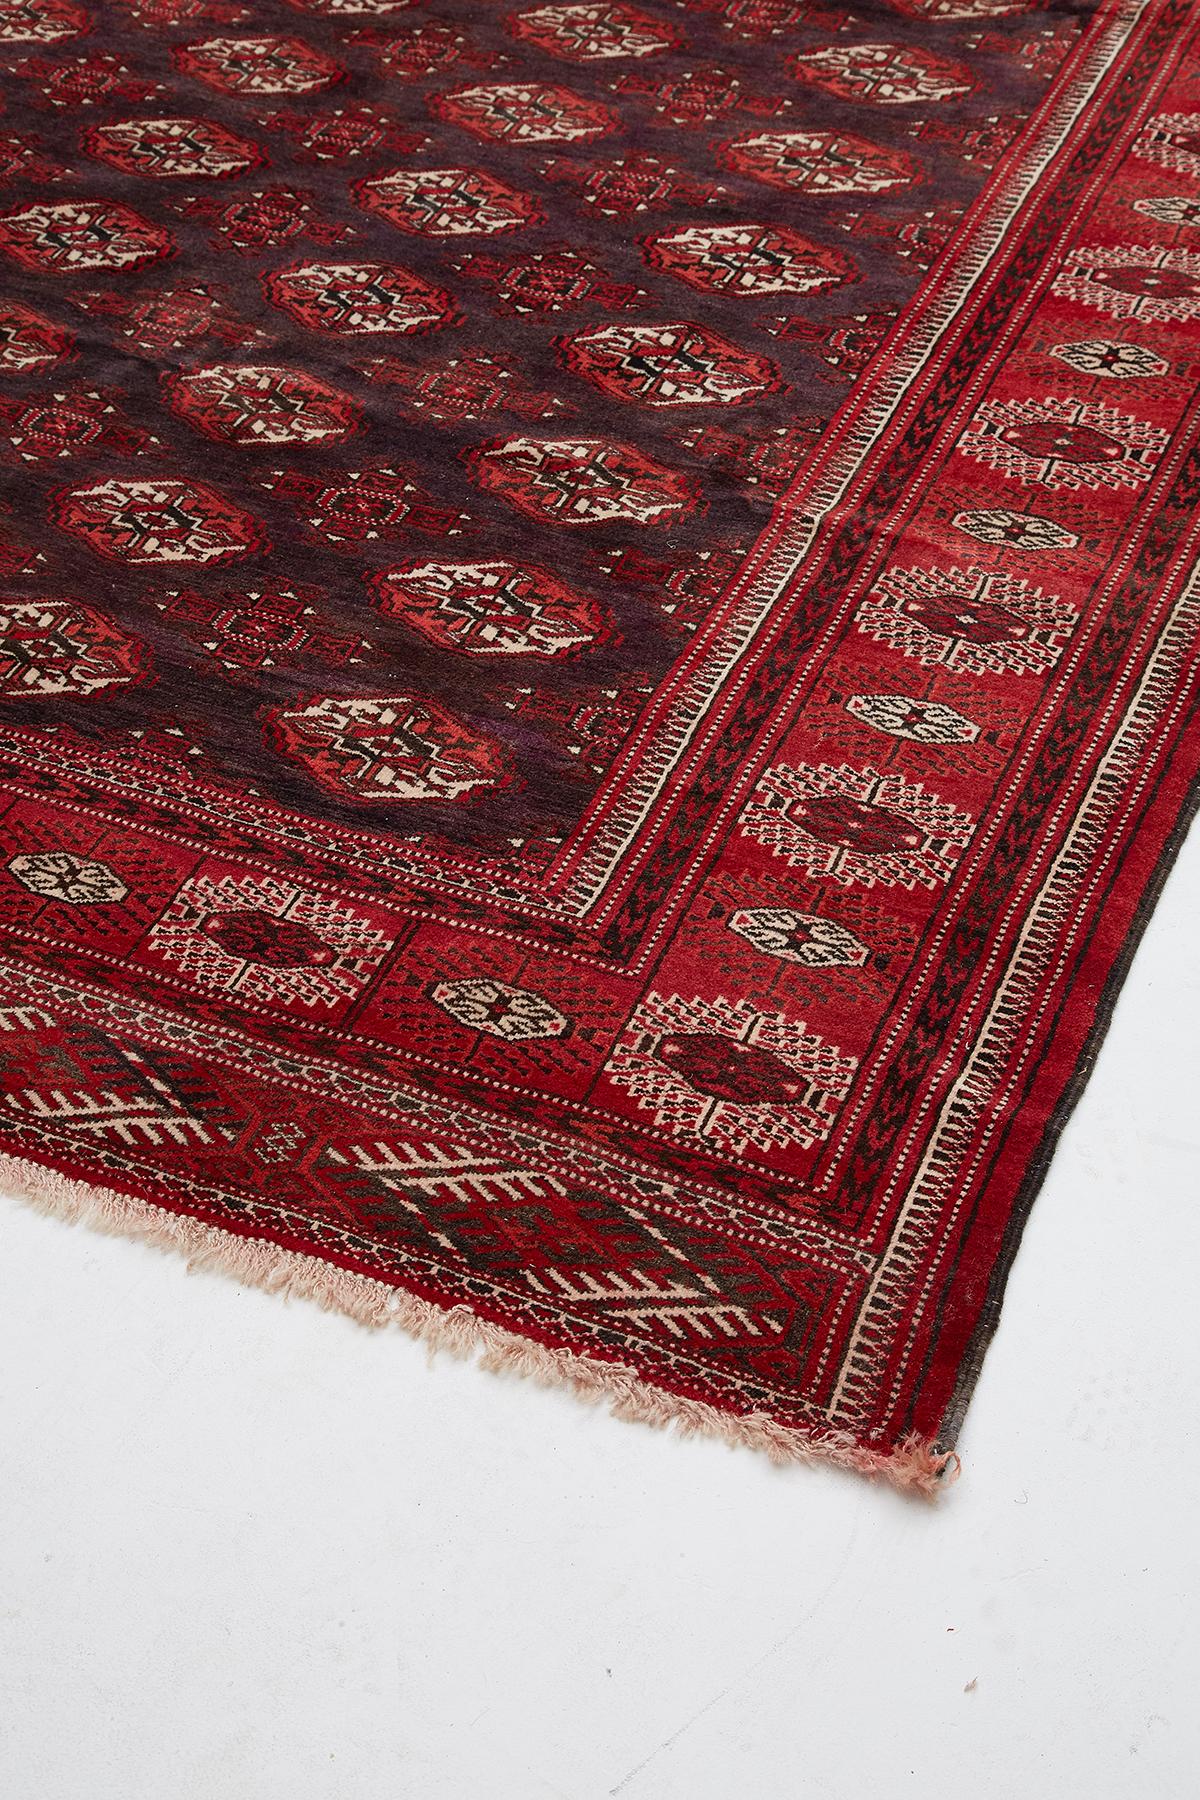 Wool Persian Bokhara Turkoman Handwoven Rug